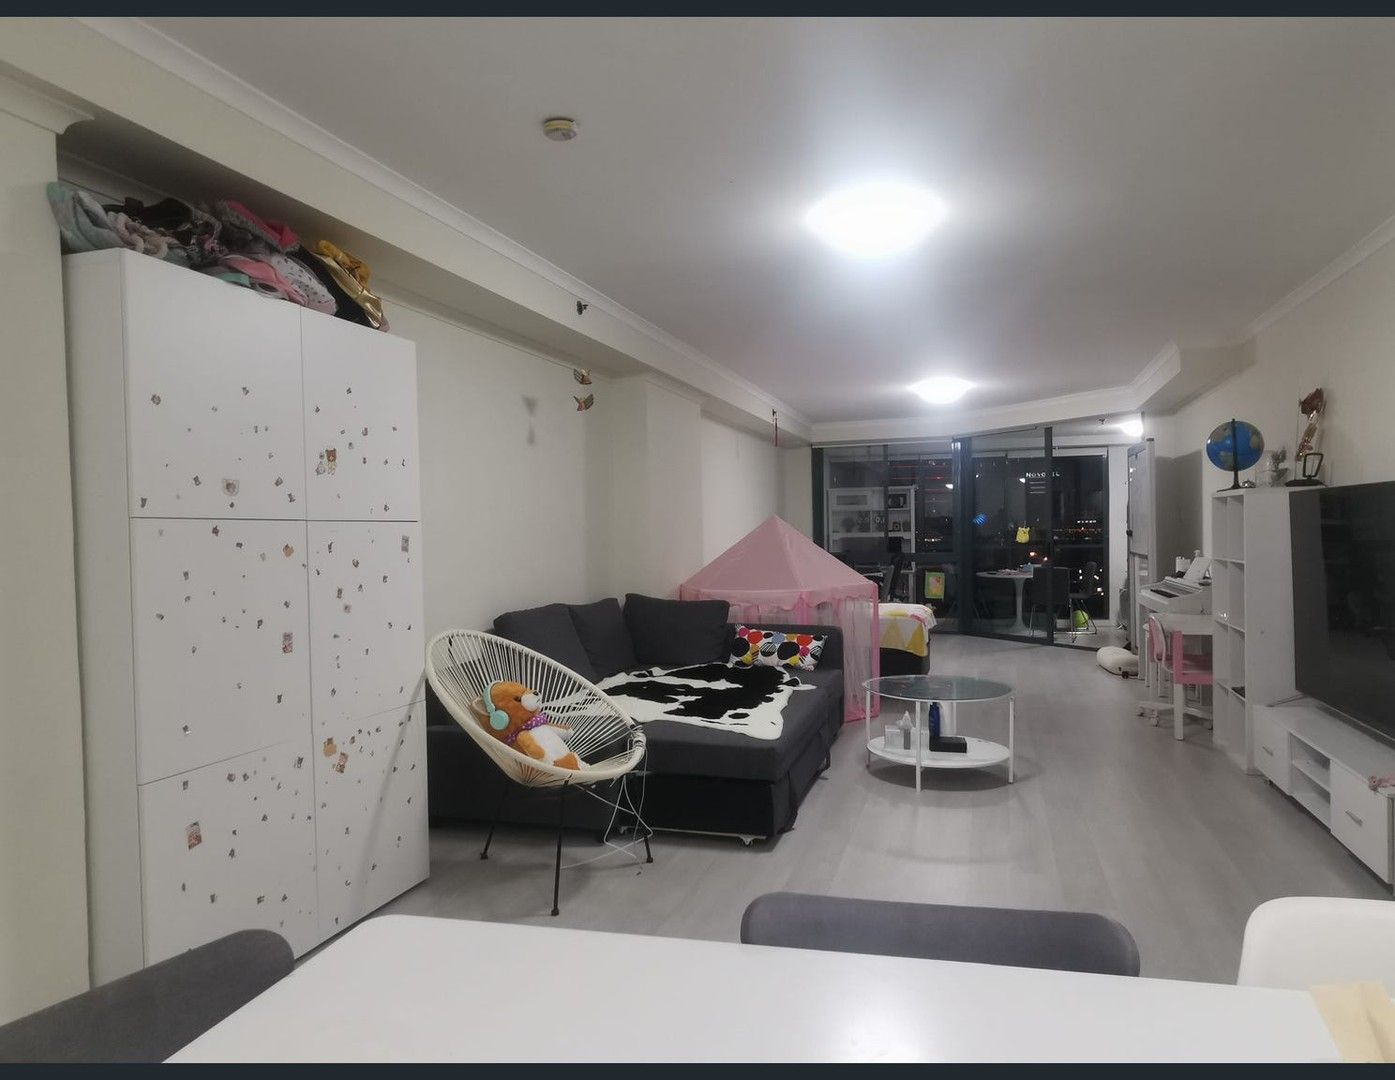 2 bedrooms Apartment / Unit / Flat in 222 sussex st SYDNEY NSW, 2000